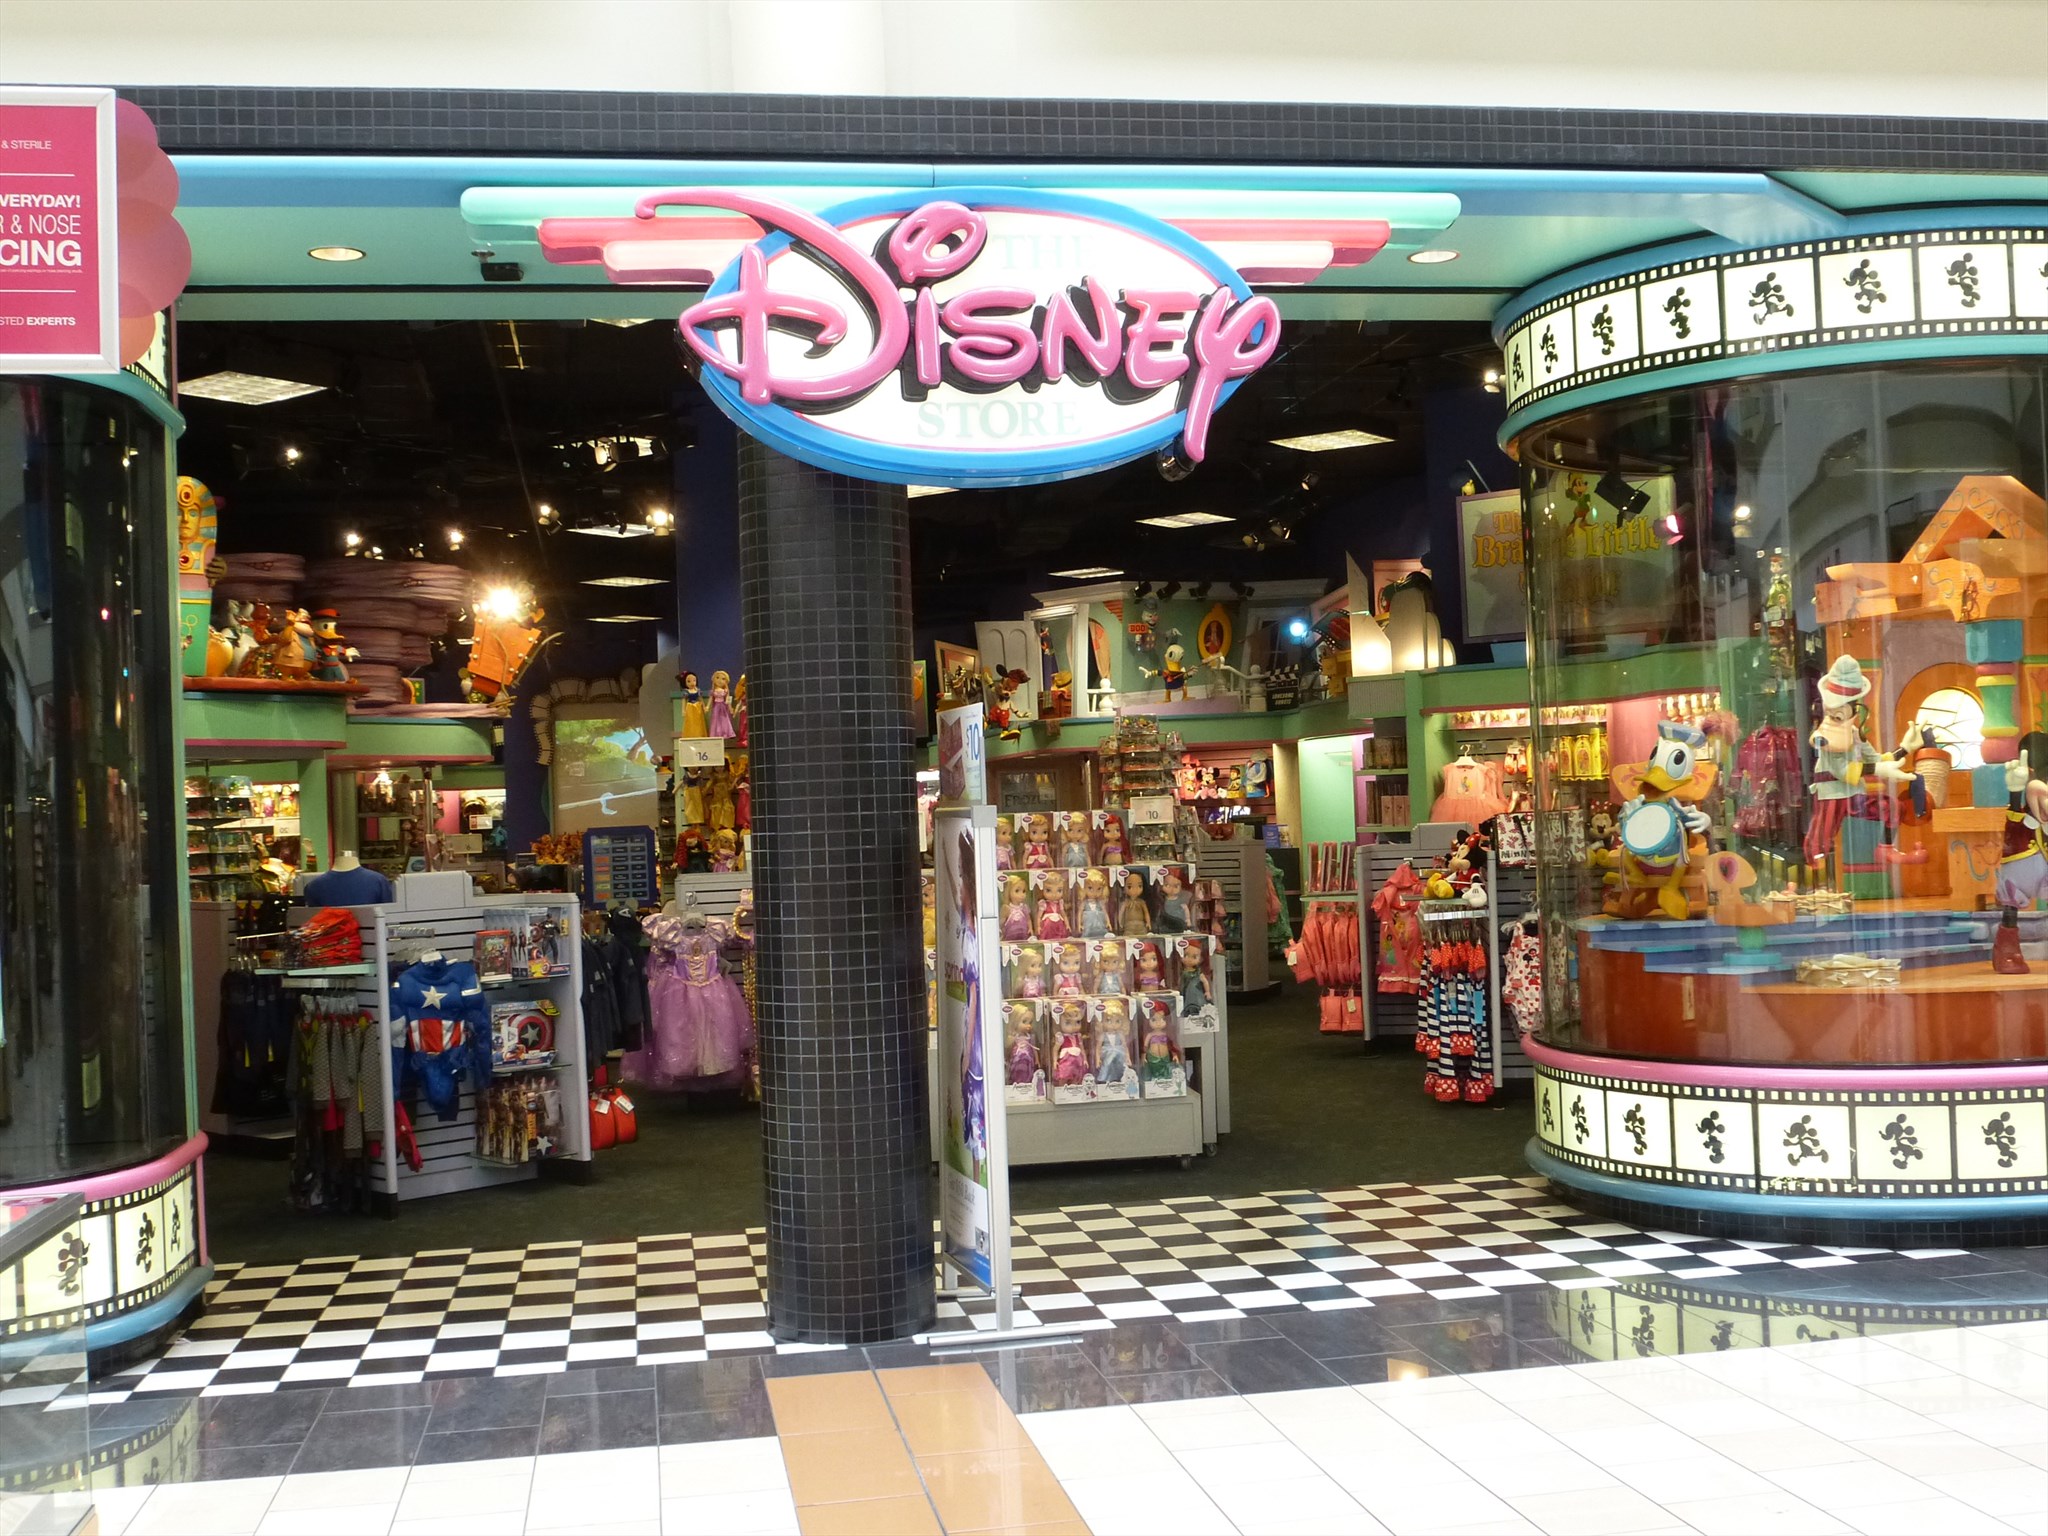 The Disney Store at the Tucson Mall, Tucson, Arizona Image